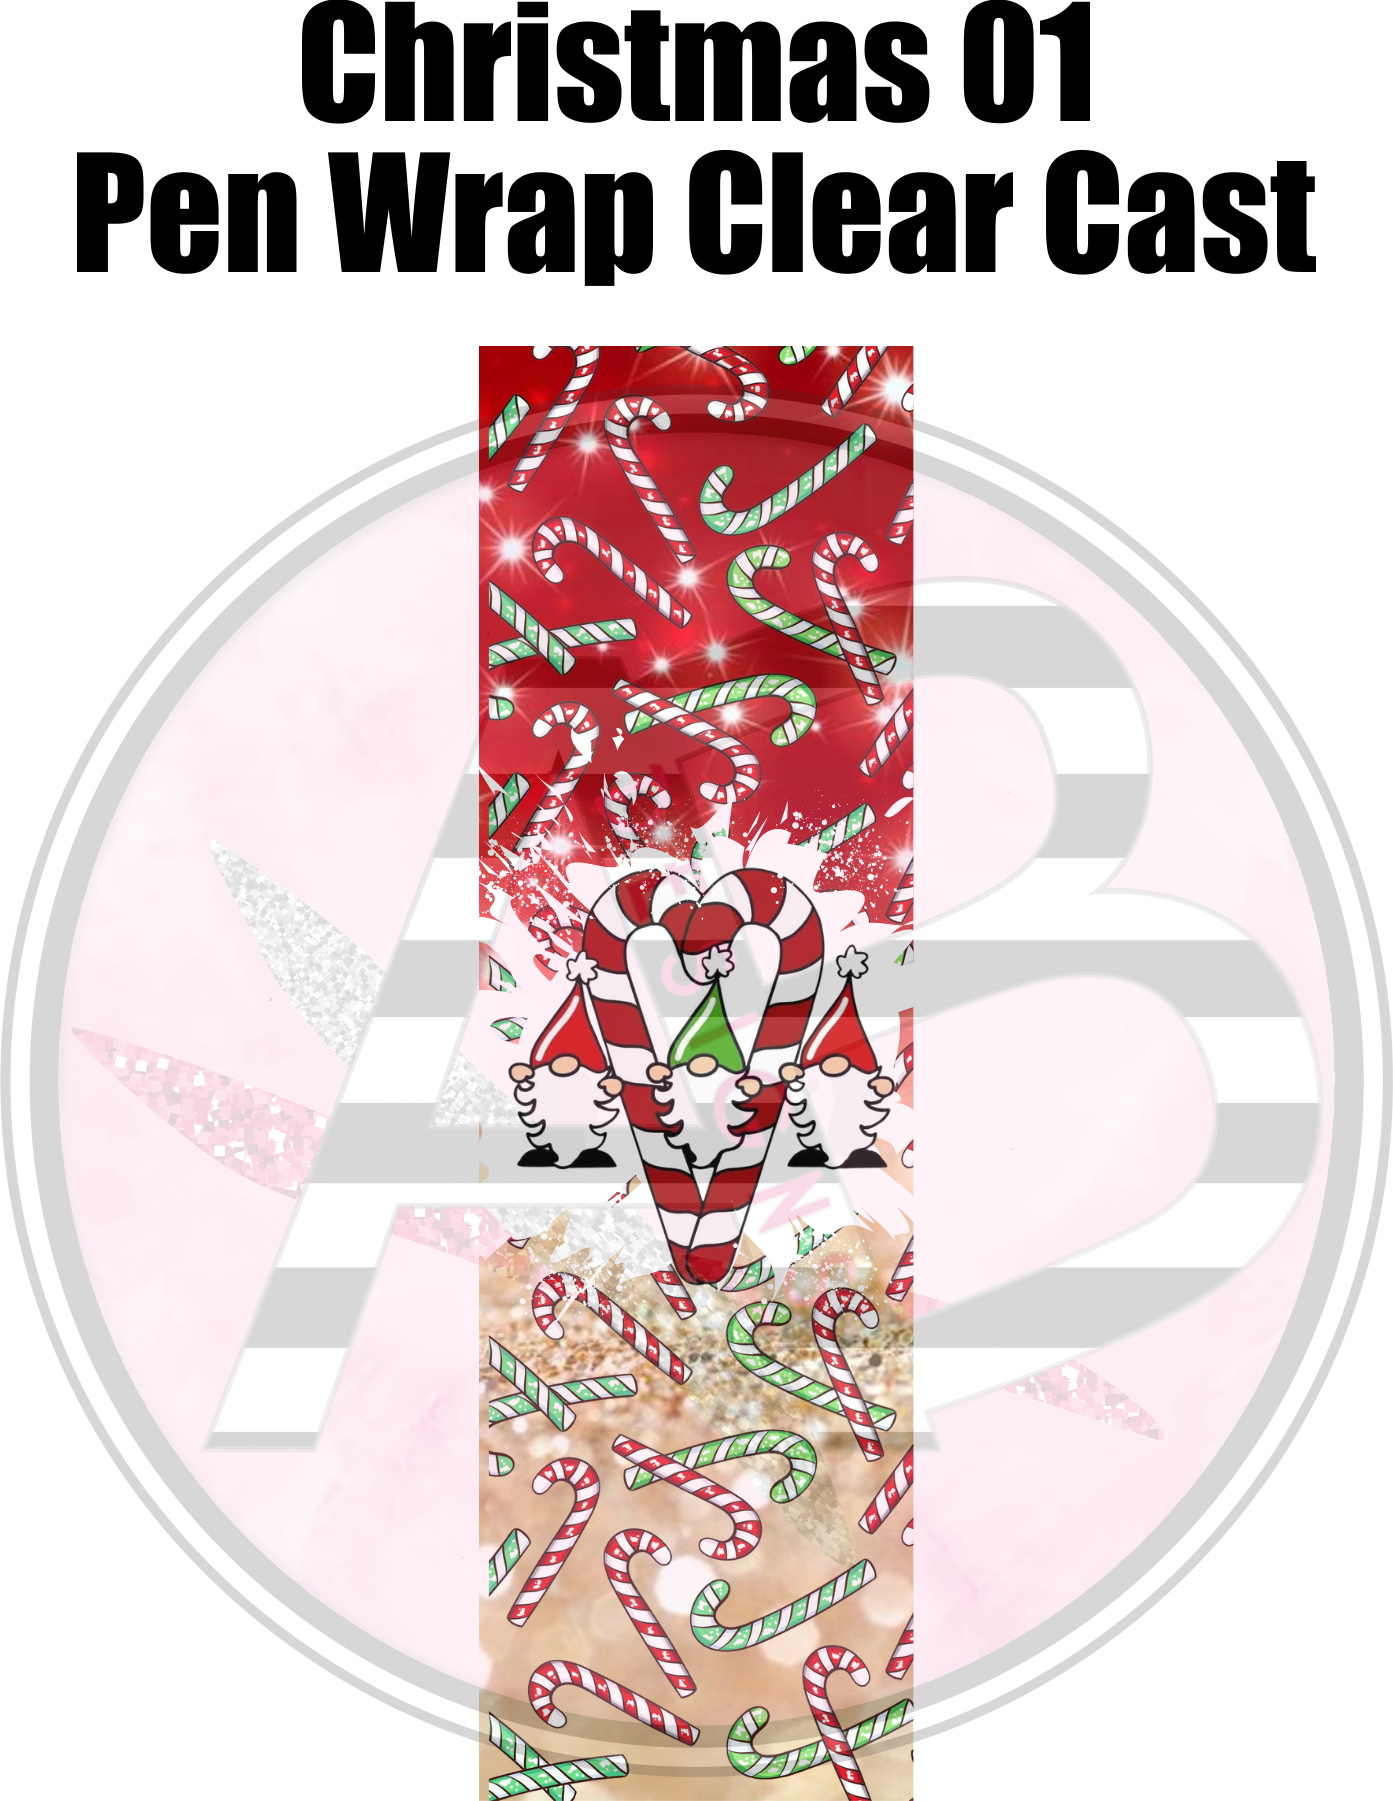 Christmas 01 - Pen Wrap Clear Cast Decal